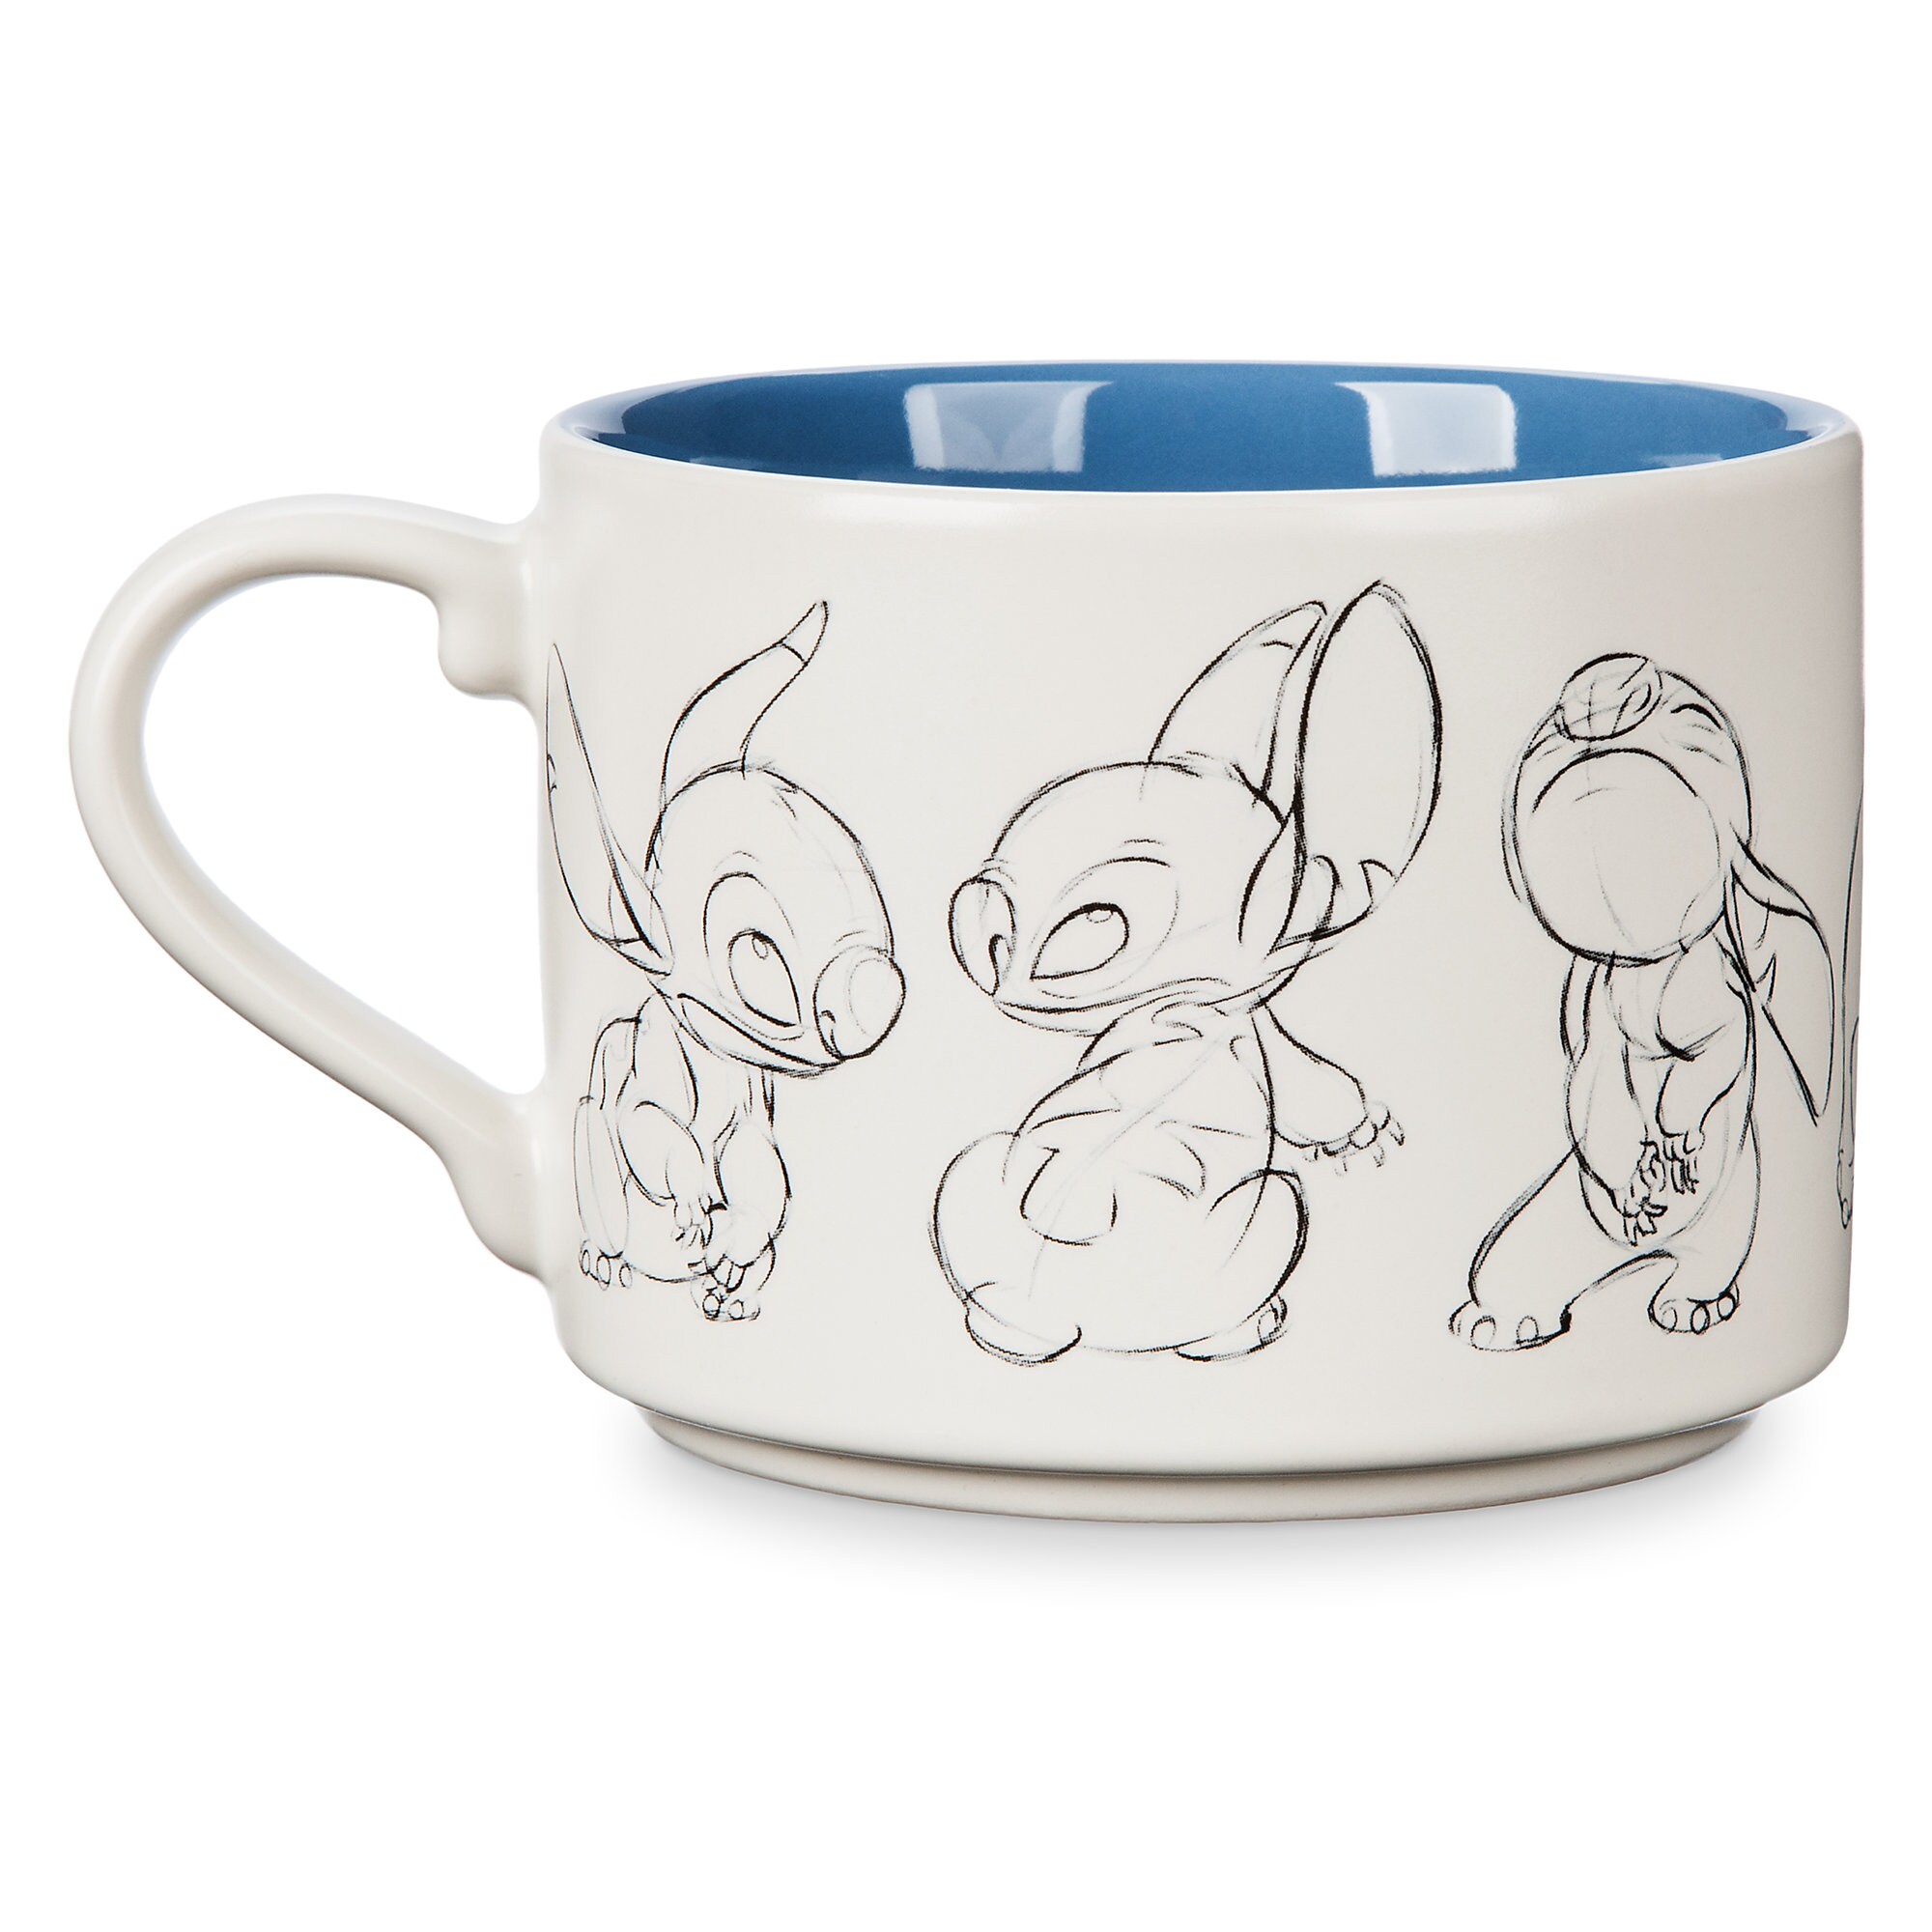 Stitch Animation Sketch Mug